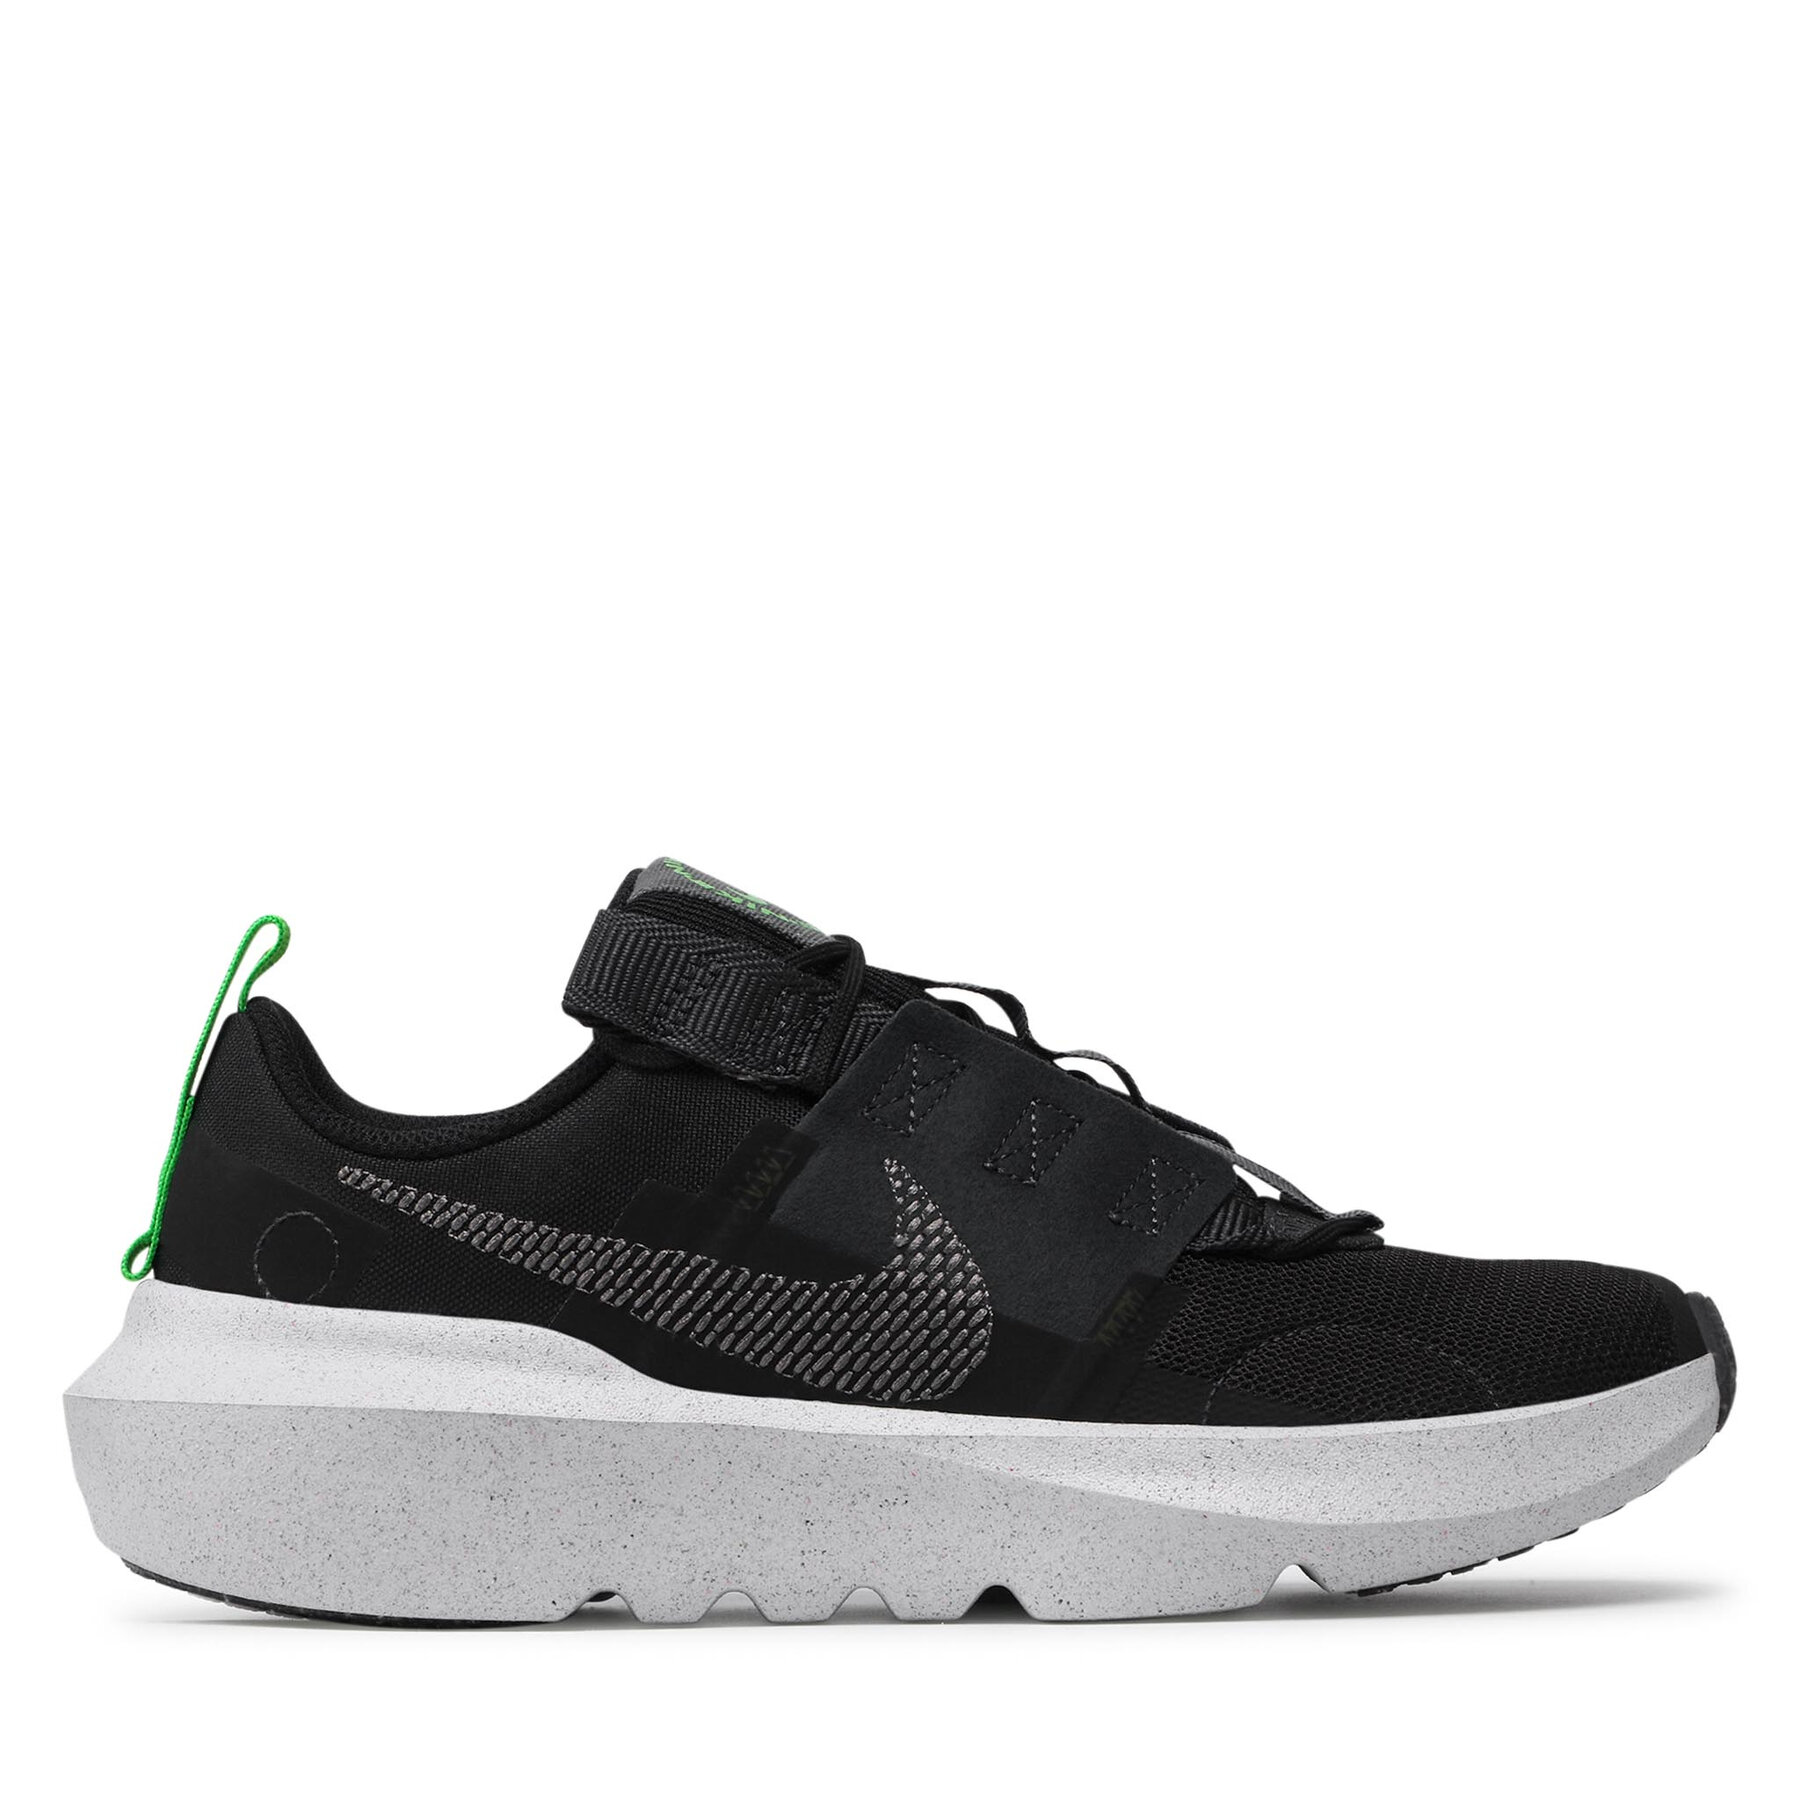 Sneakers Nike Crater Impact (Gs) DB3551 001 Noir